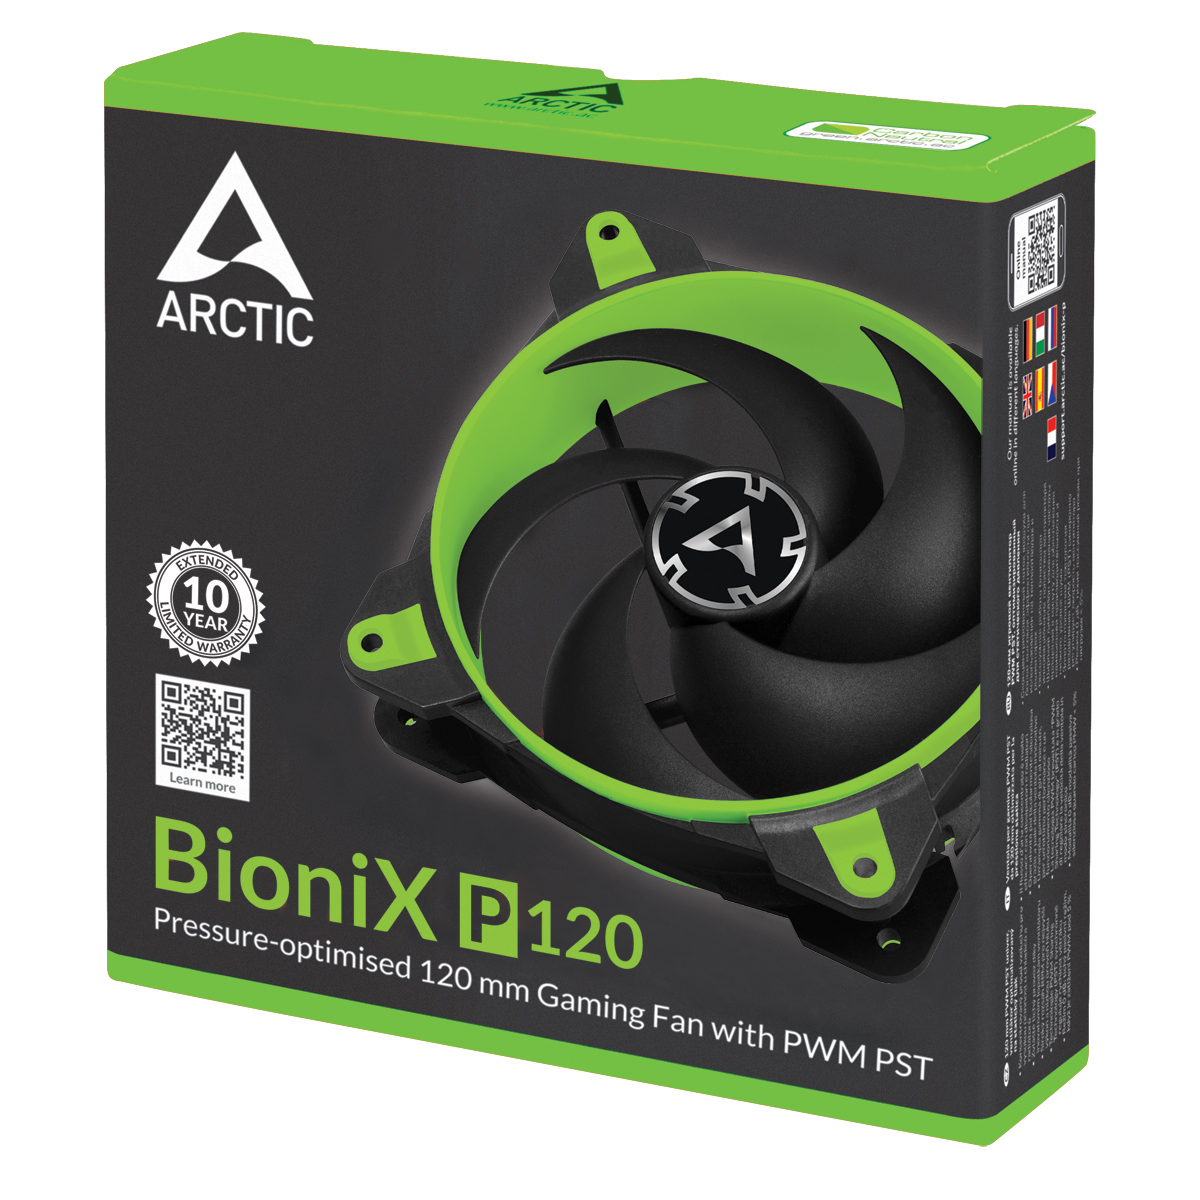 Bionix_P120_Green_G05